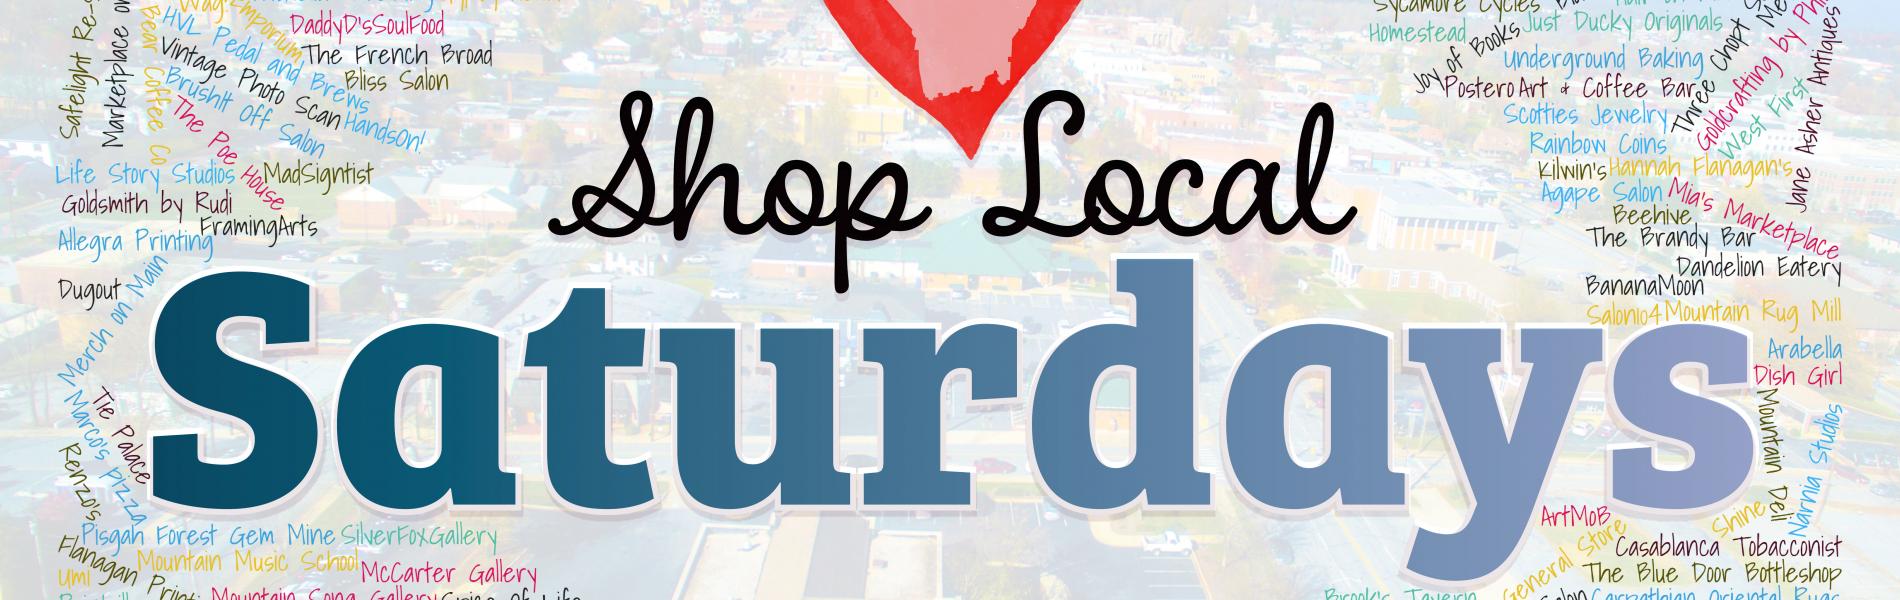 Love Hendo Shop Local Saturday City of Hendersonville, NC